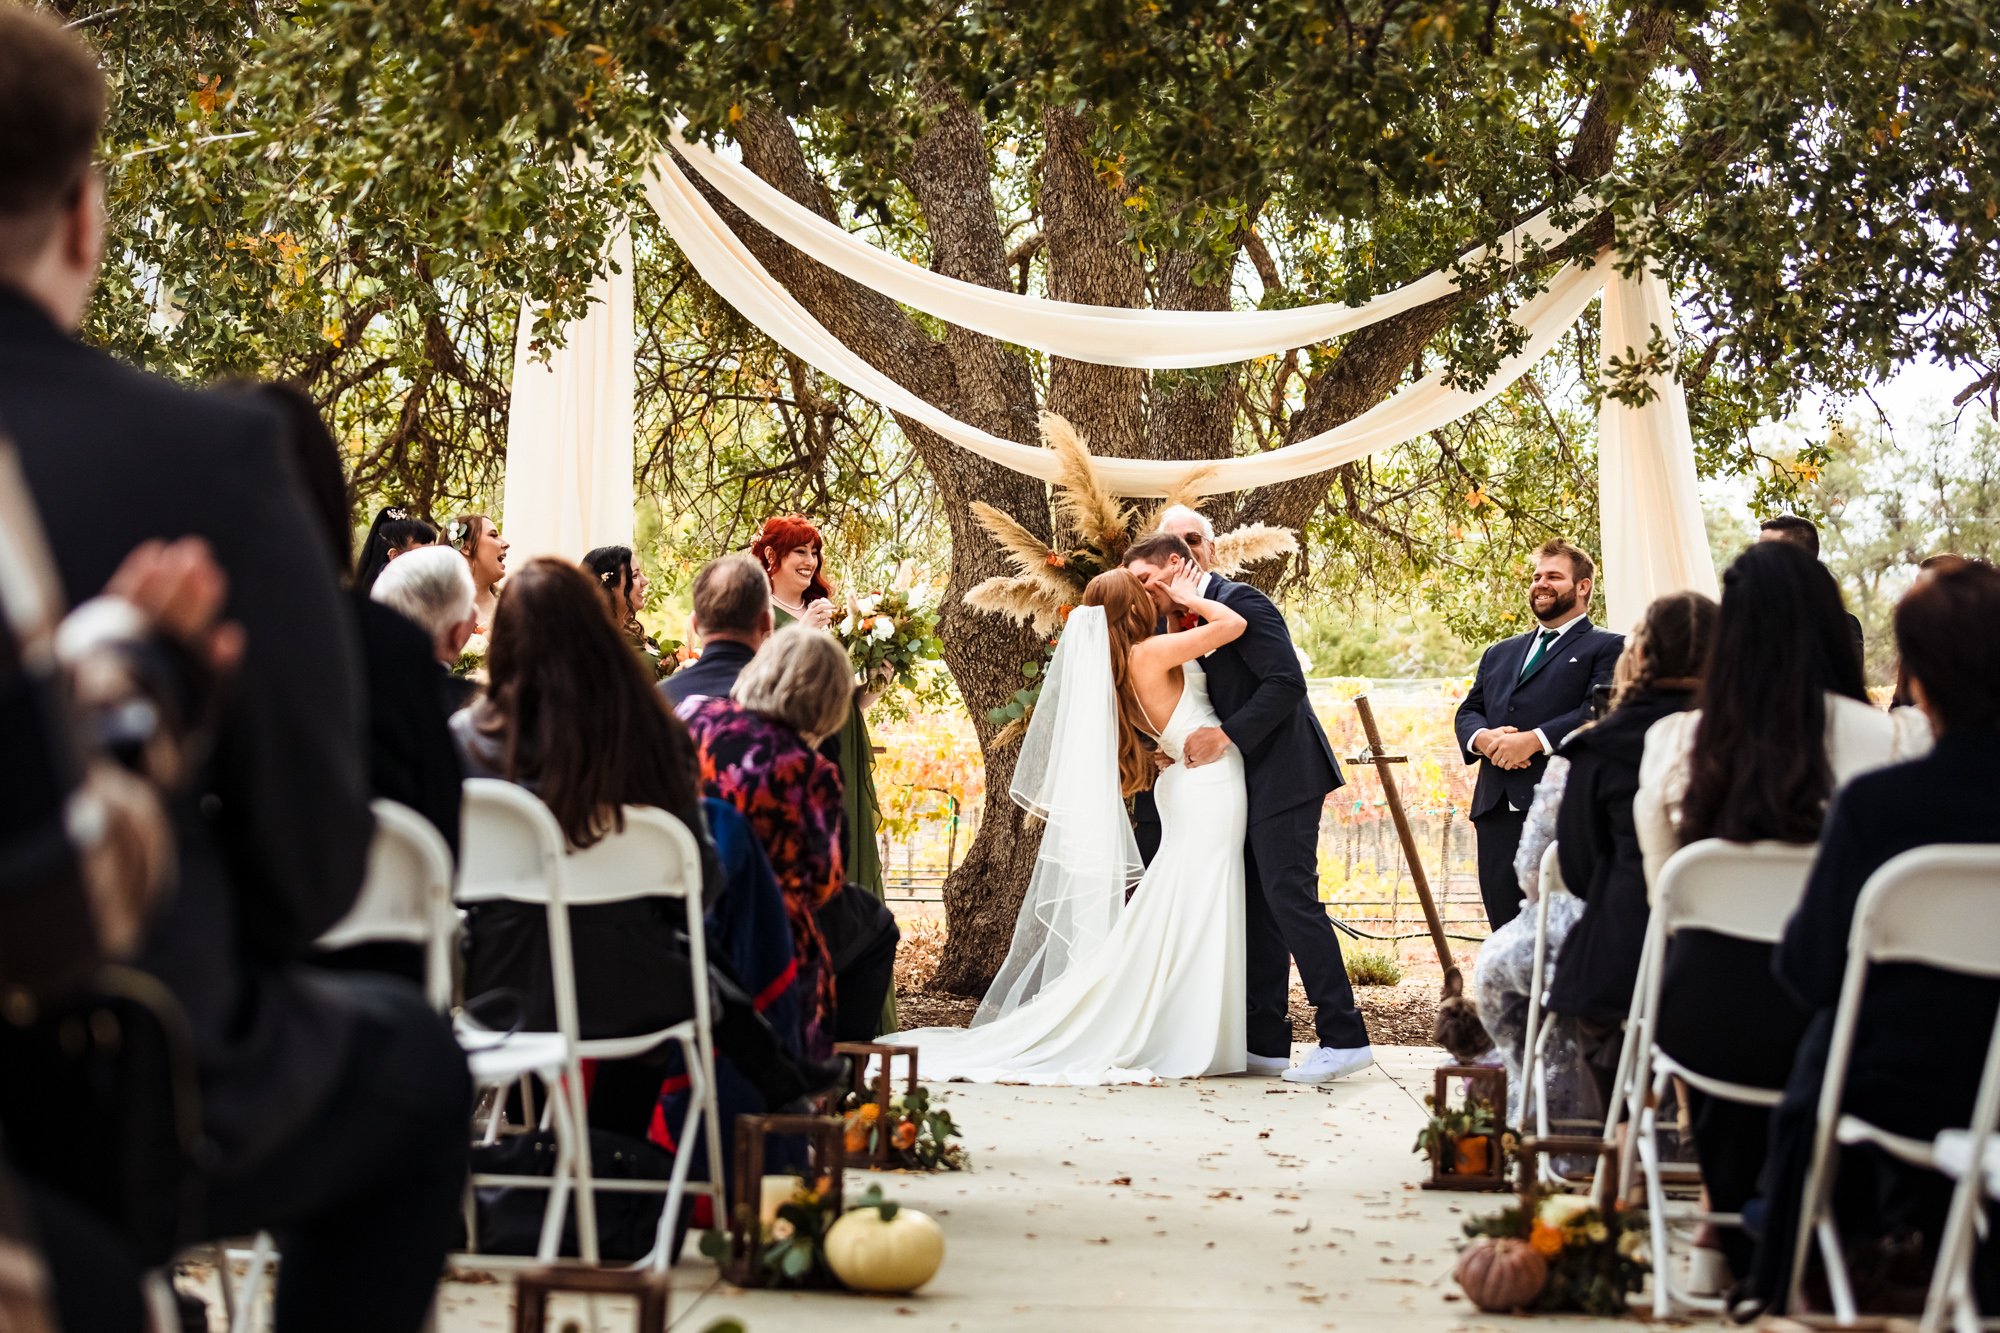 Tehachapi-Wedding-Photography-Dorner-Vineyard-43.jpg